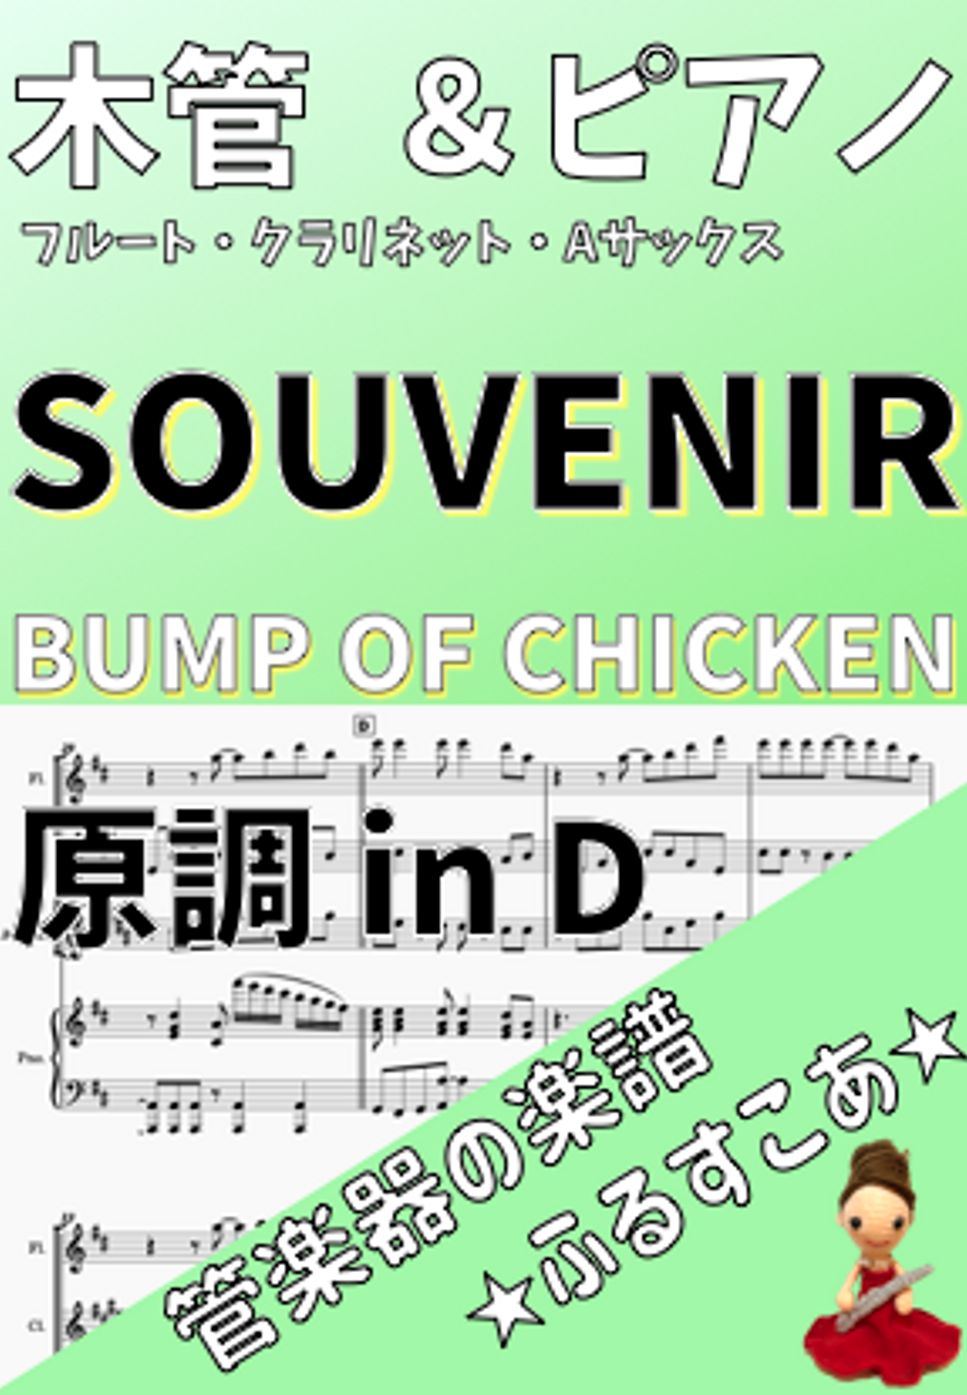 BUMP OF CHICKEN - SOUVENIR by 管楽器の楽譜★ふるすこあ